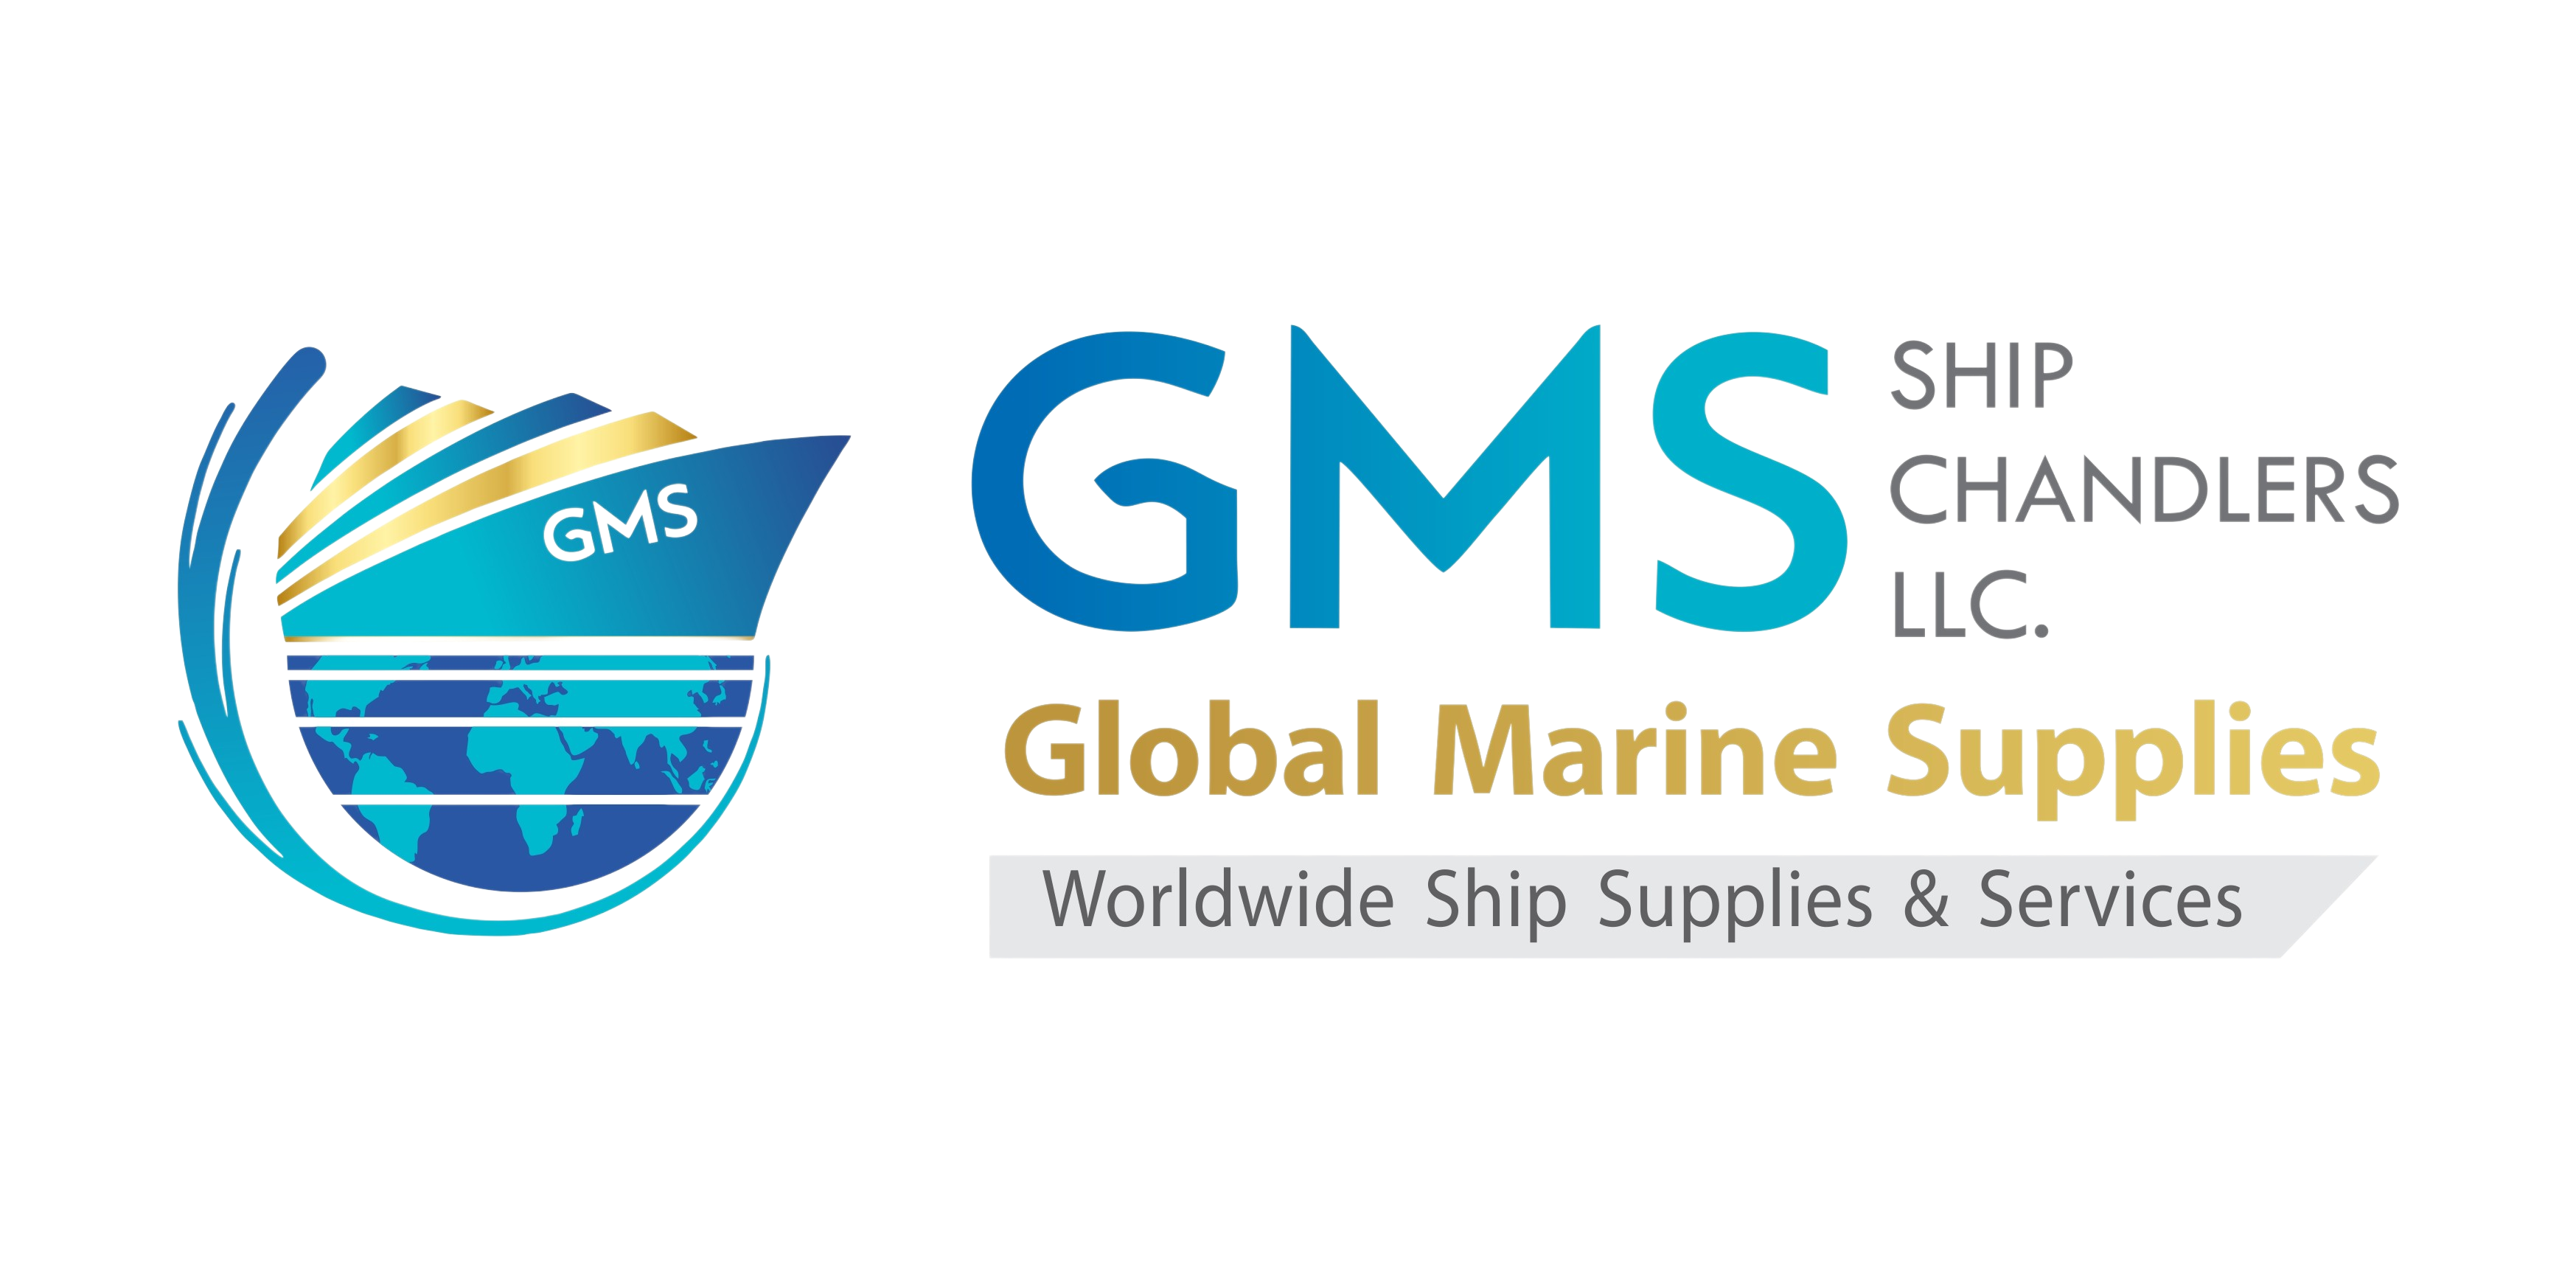 Global Marine Supplies Logo